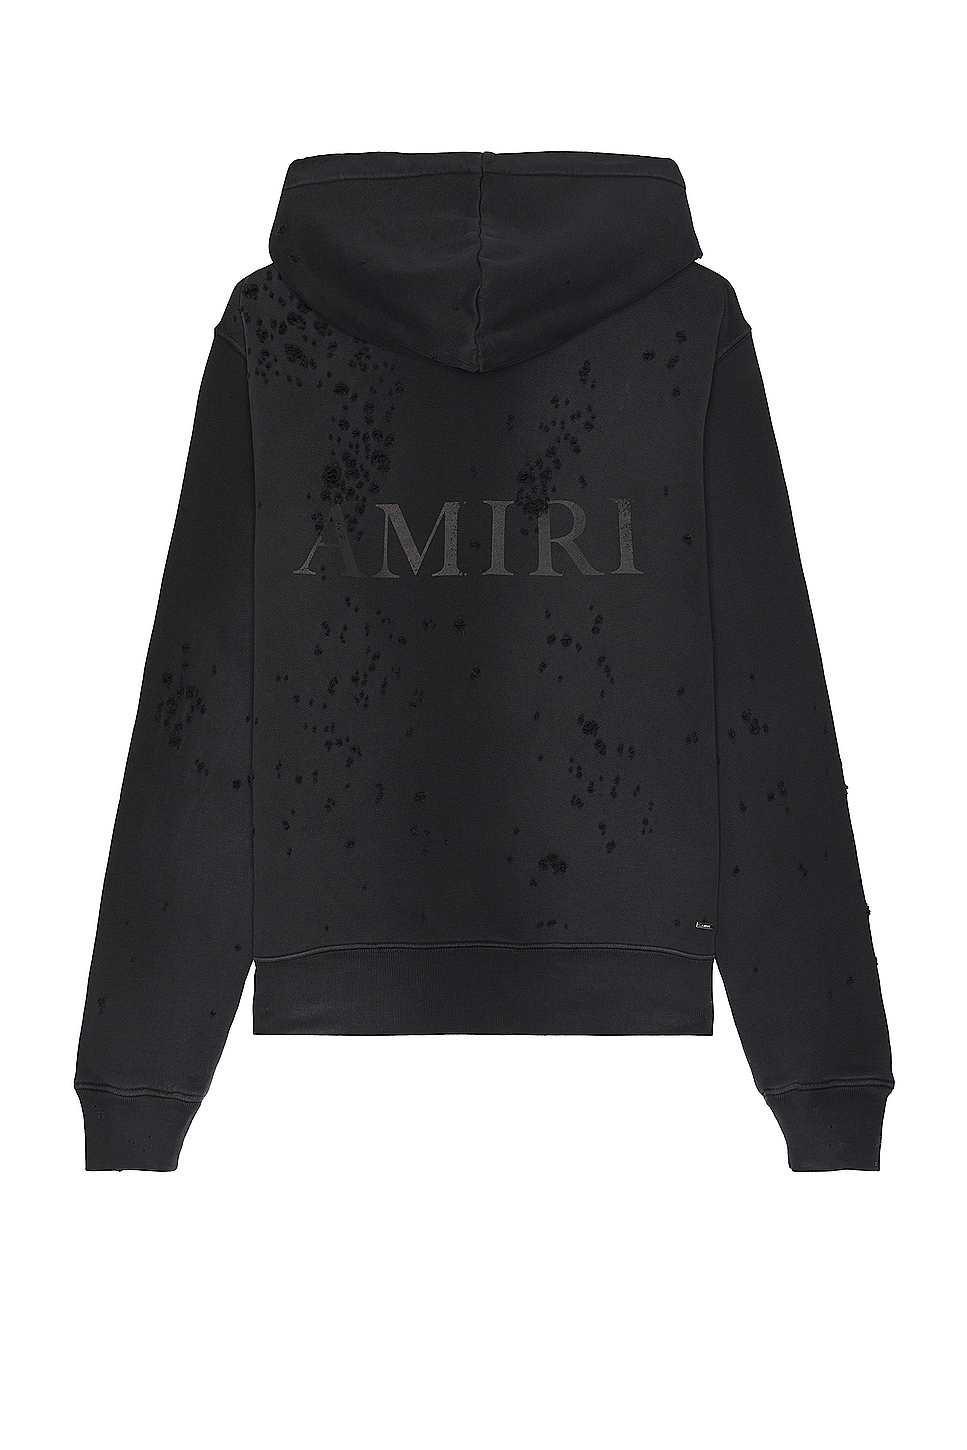 Image 1 of Amiri Ma Logo Shotgun Zip Hoodie in Faded Black